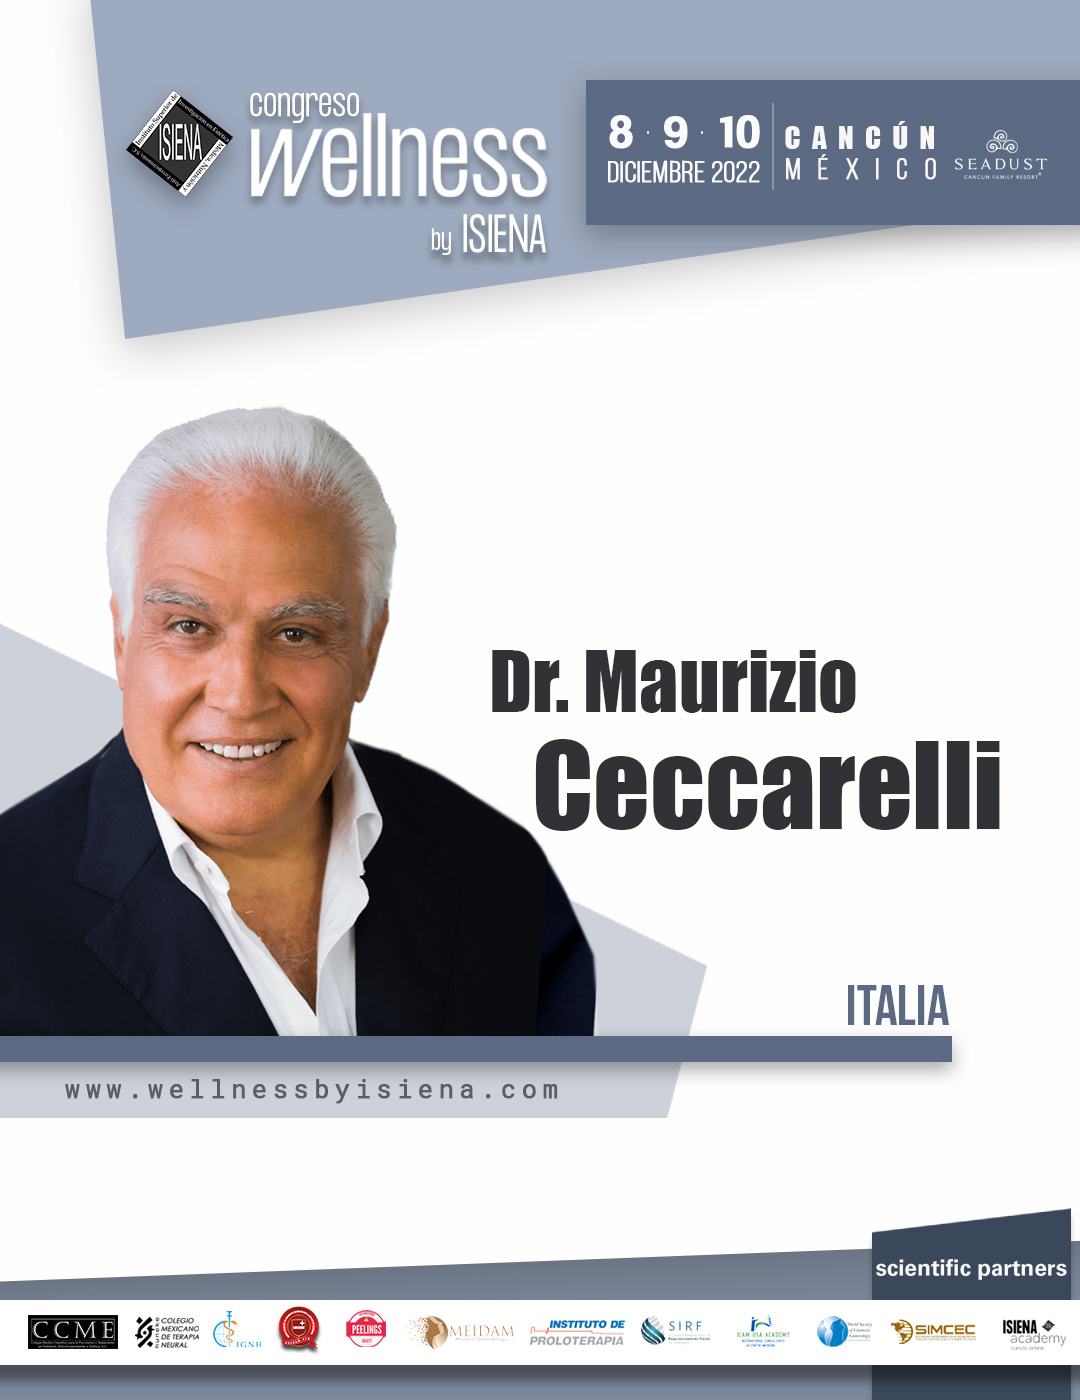 Dr. Maurizio Ceccarelli - Wellness by ISIENA